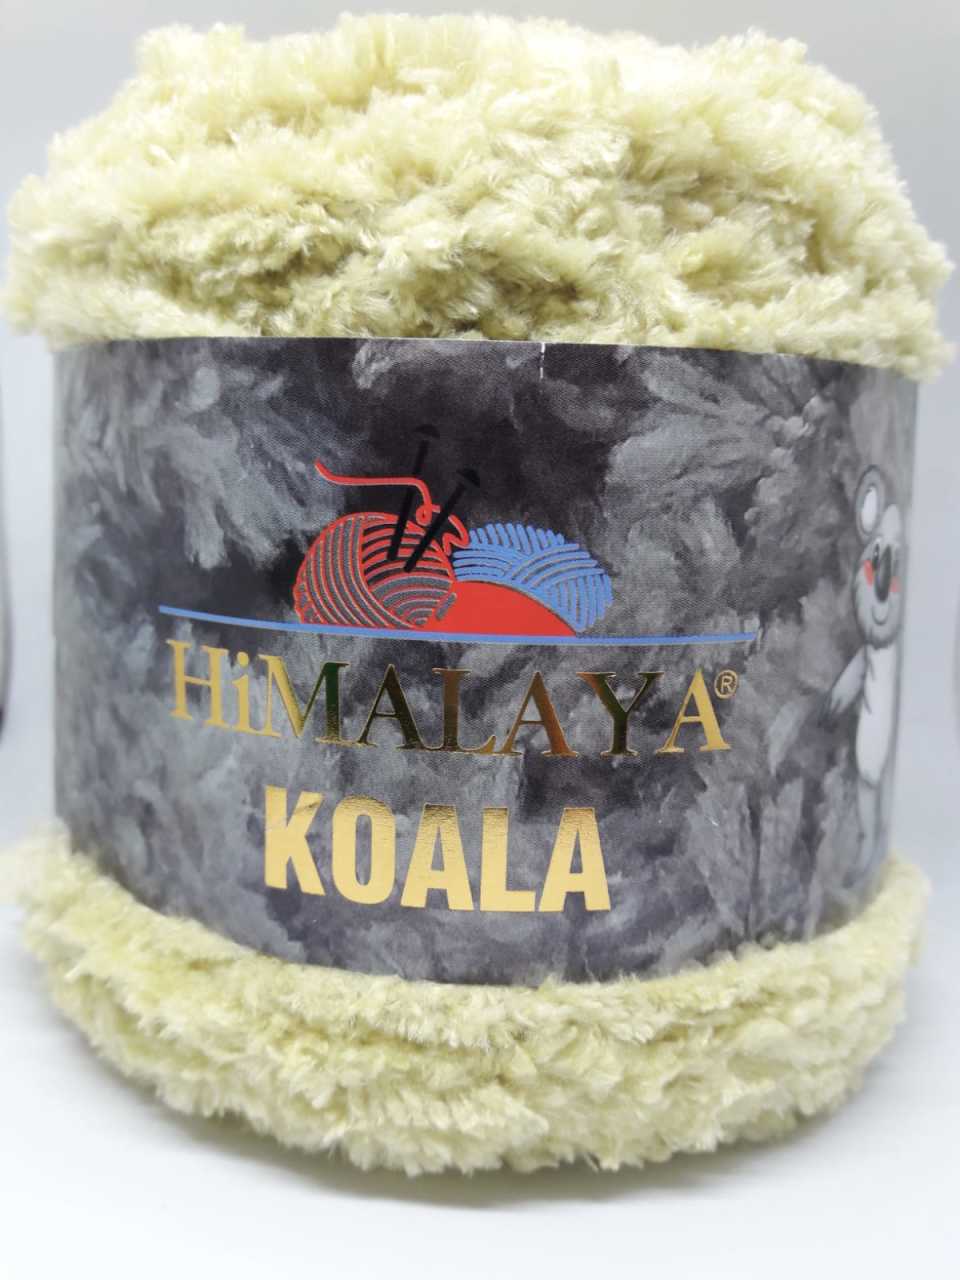 Himalaya koala 75722